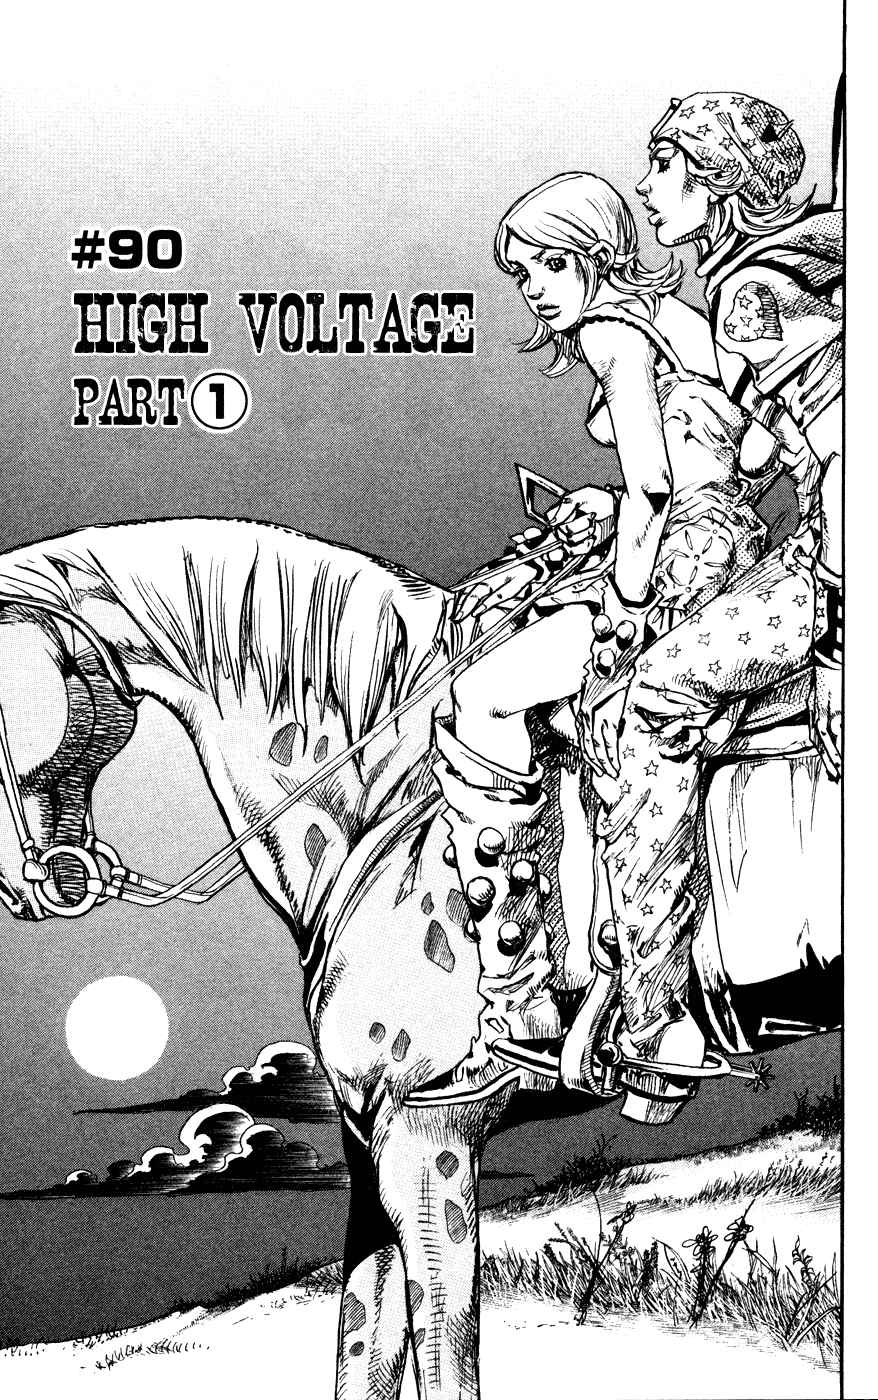 JoJo's Bizarre Adventure Part 7 Steel Ball Run Vol. 23 Ch. 90 High Voltage Part 1